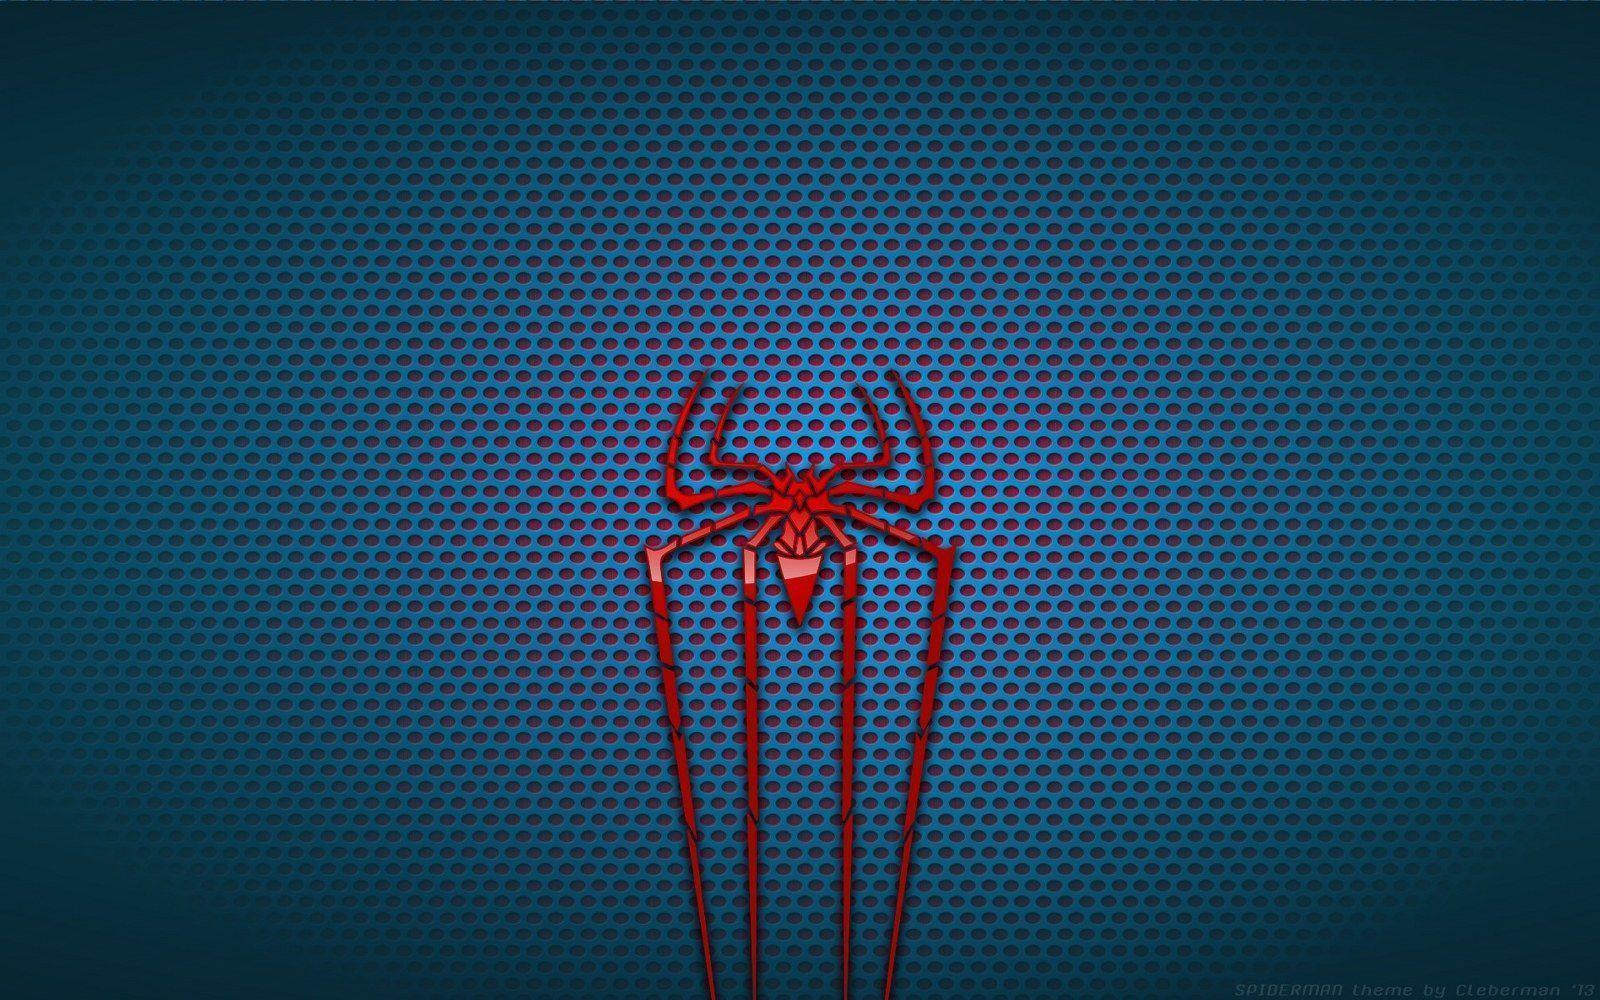 Spiderman 4 Logo Wallpaper. High Definition Wallpaper, High